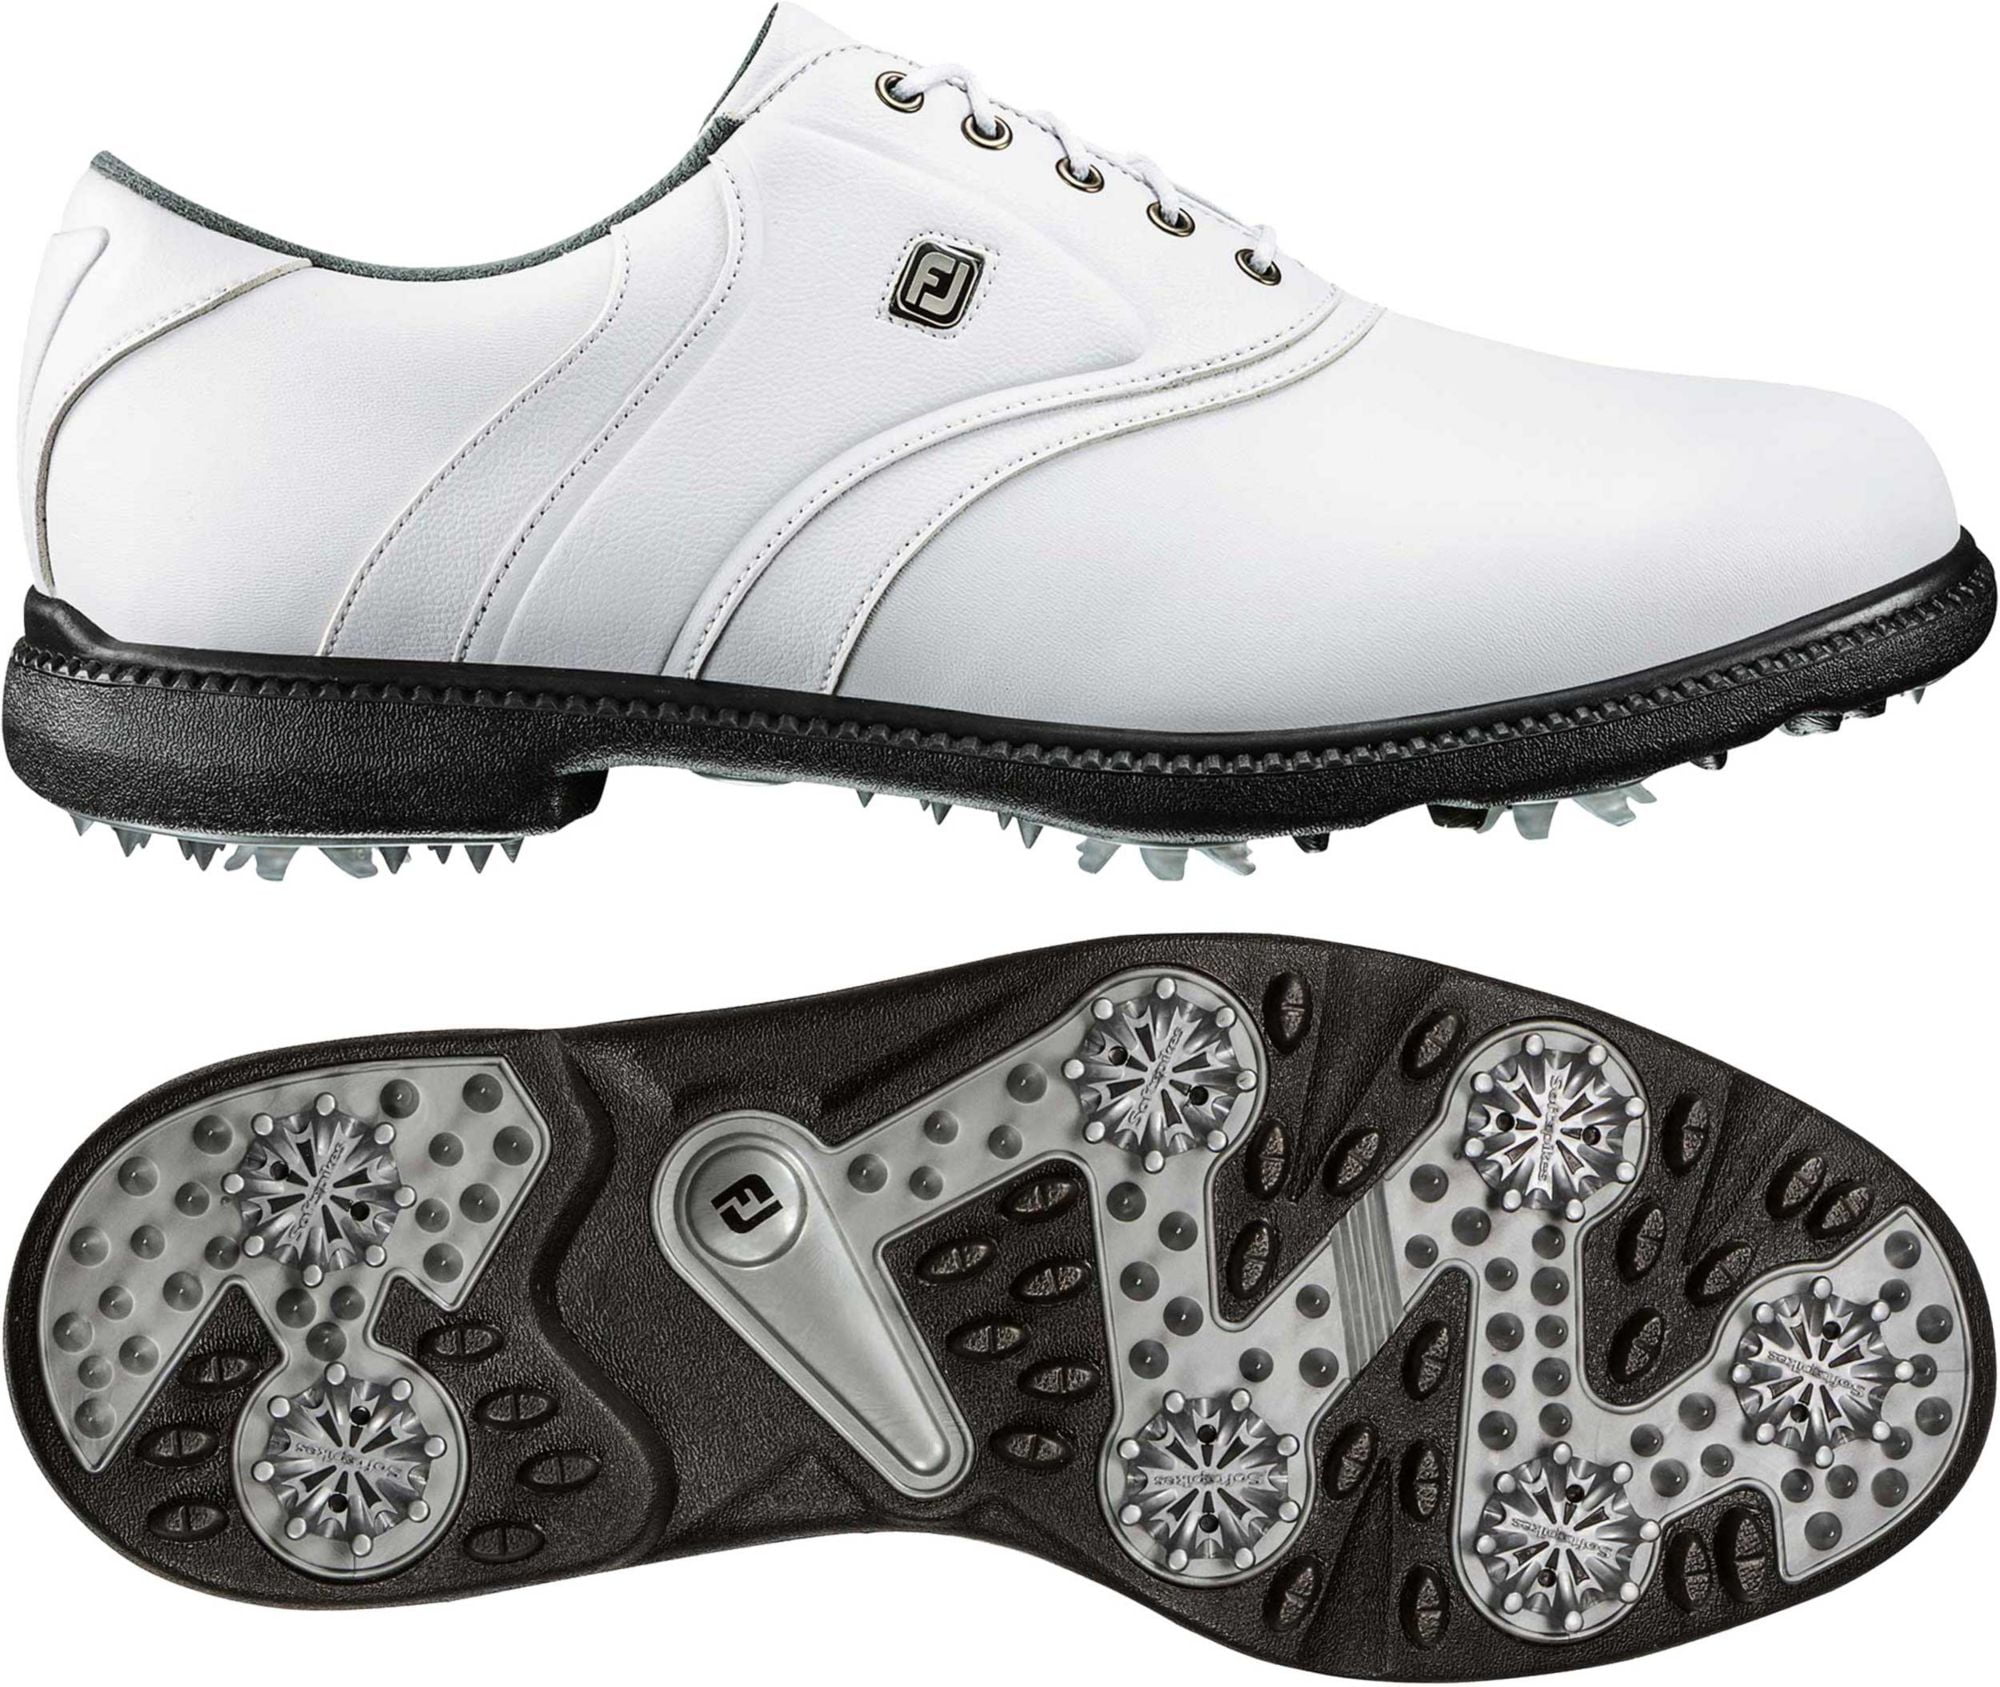 FootJoy FJ Originals Golf Shoes (White/Brown, 10)